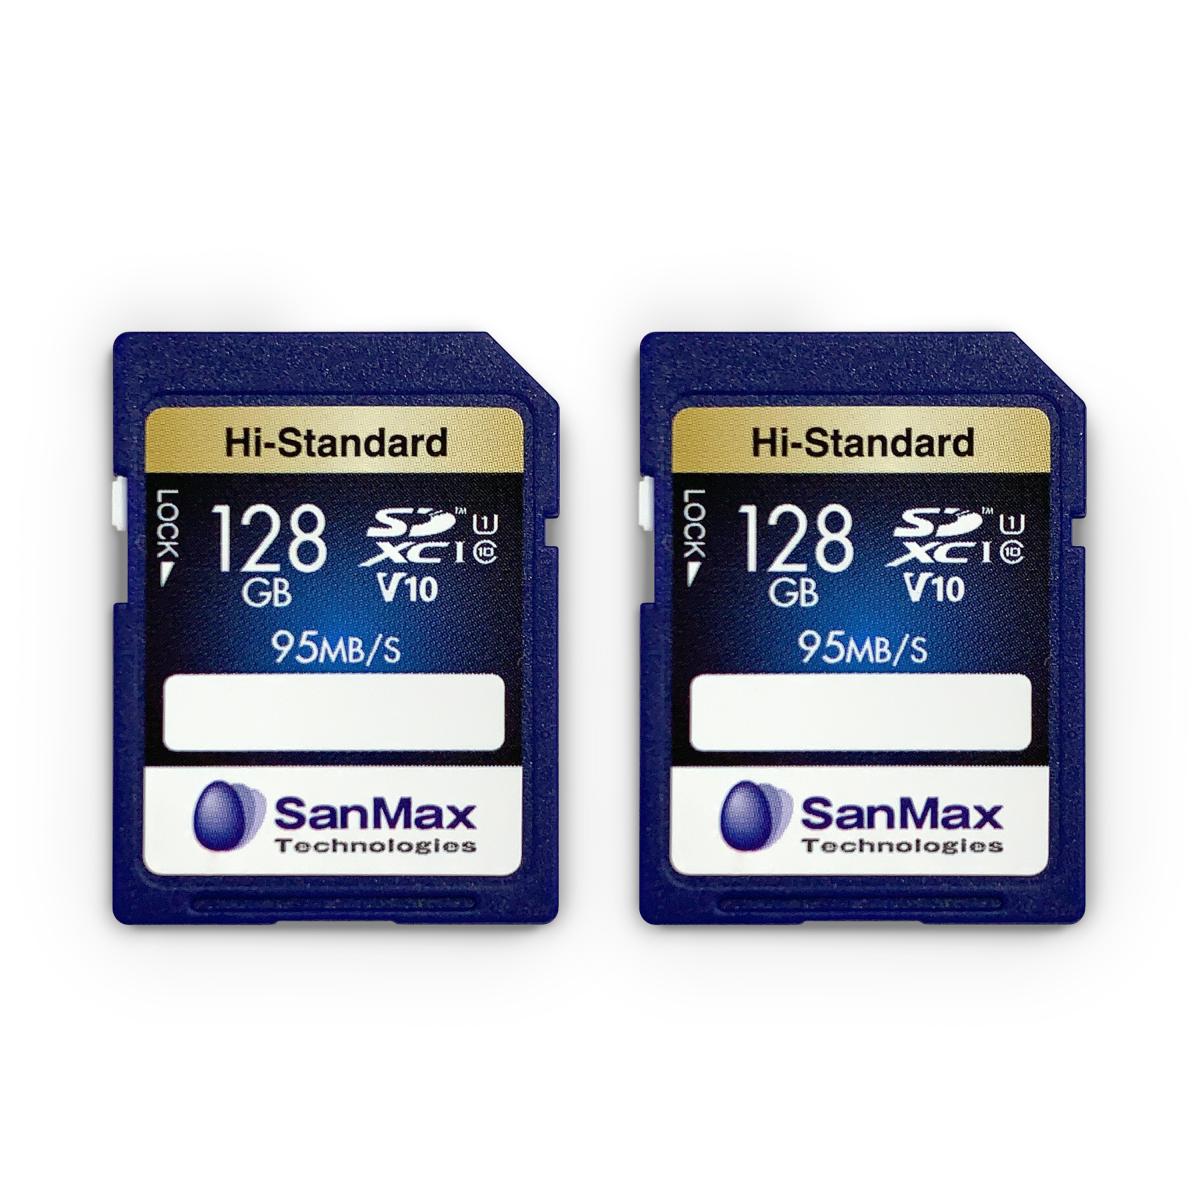 SanMax SDXCカード 128GB V10 2個パック